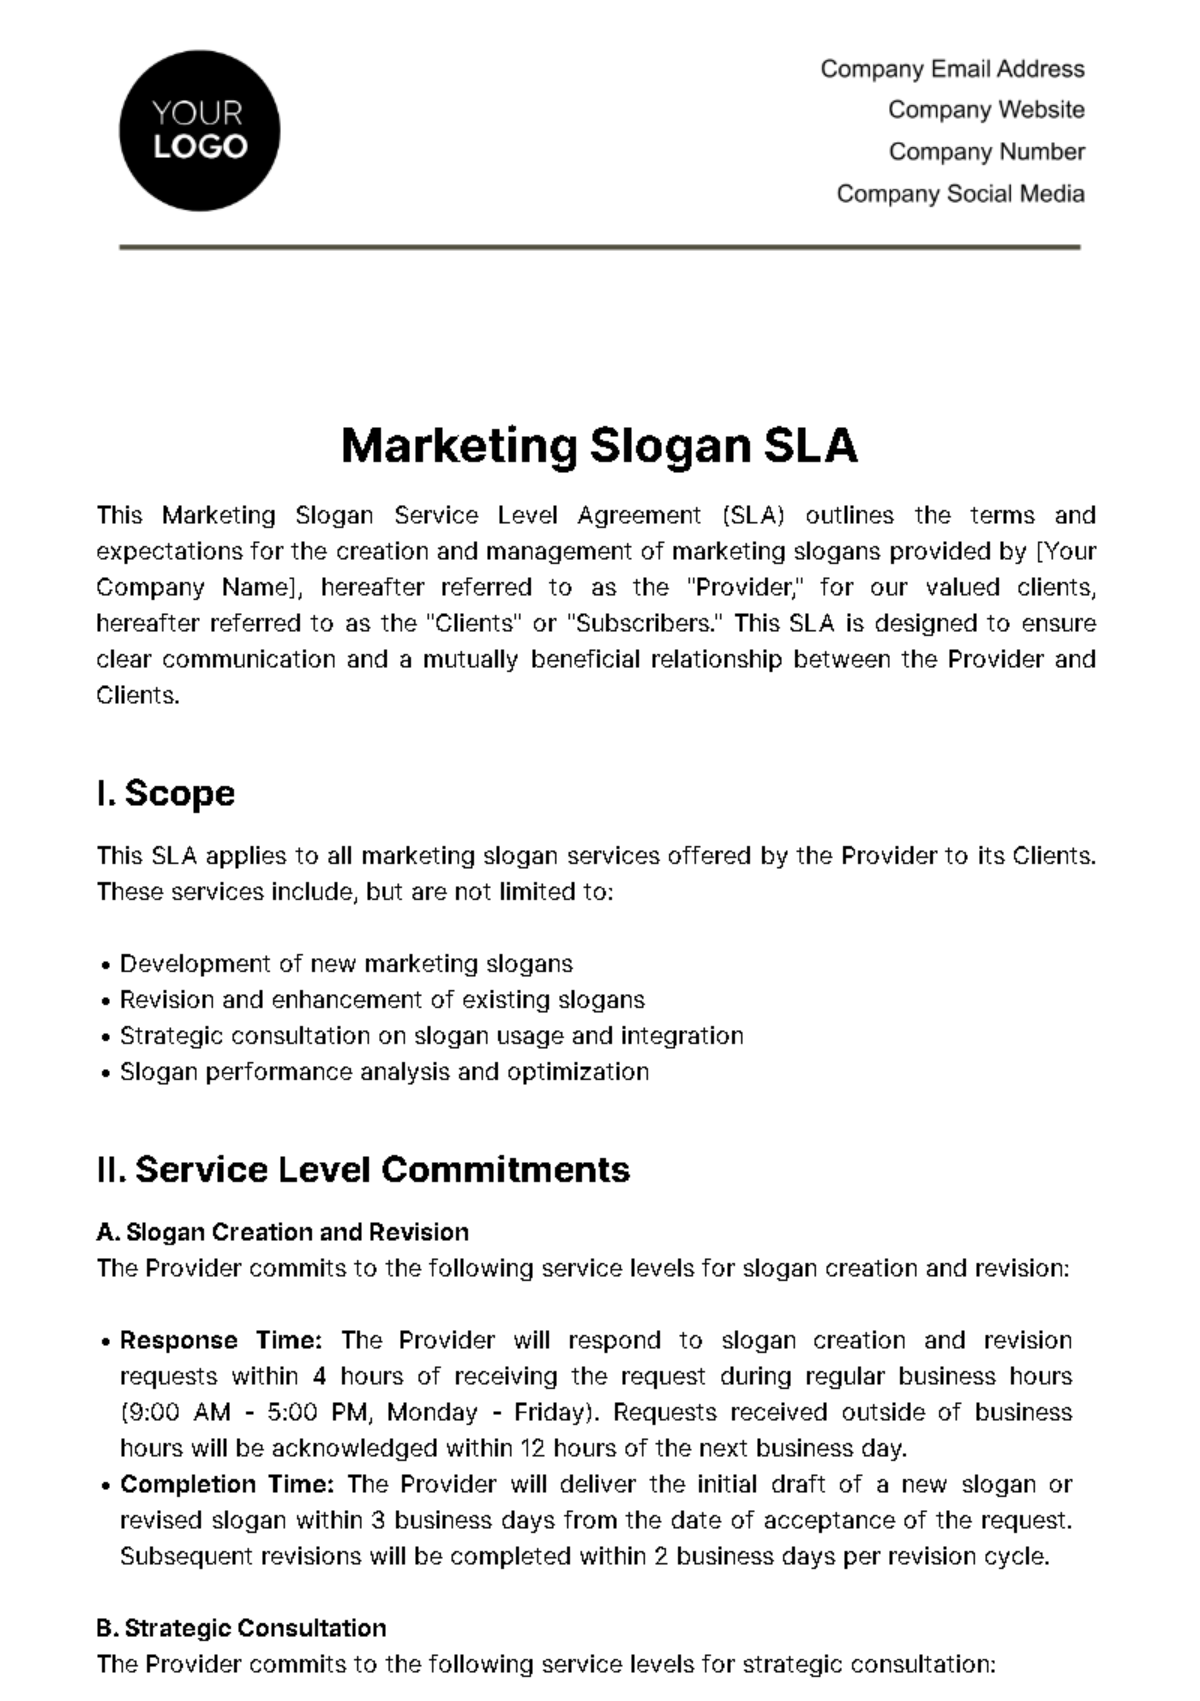 Marketing Slogan SLA Template